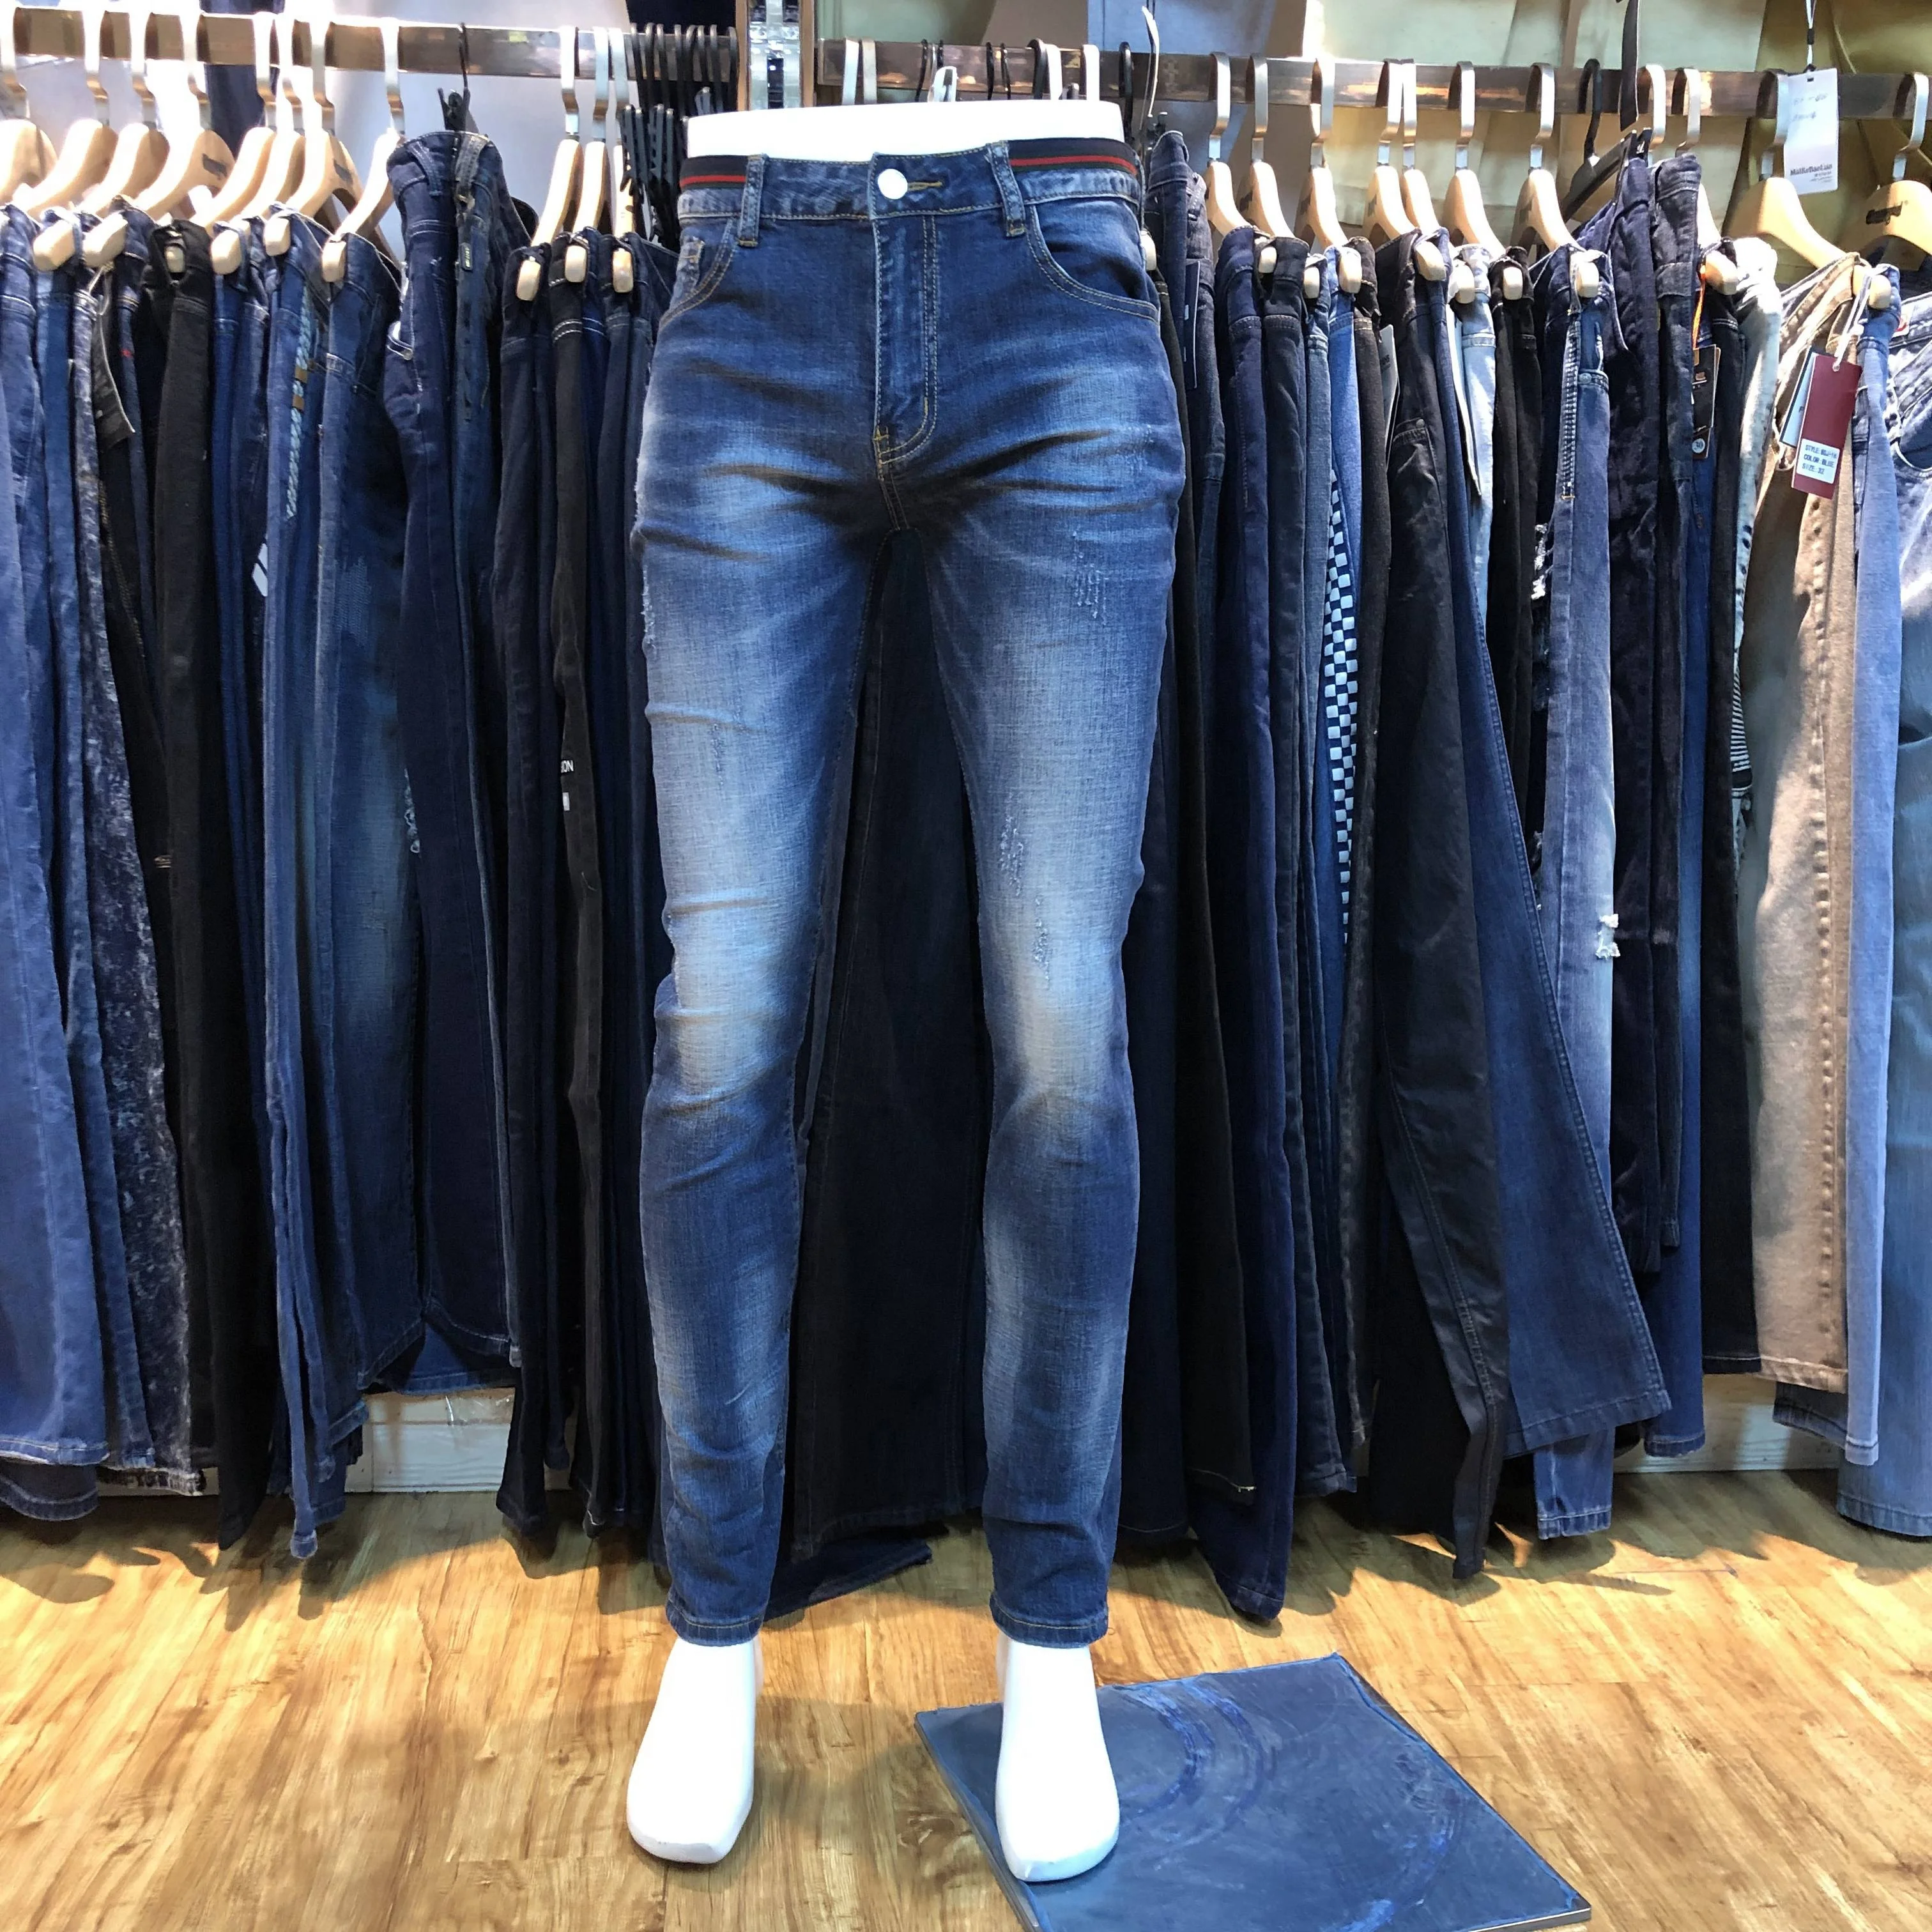 etnies jeans